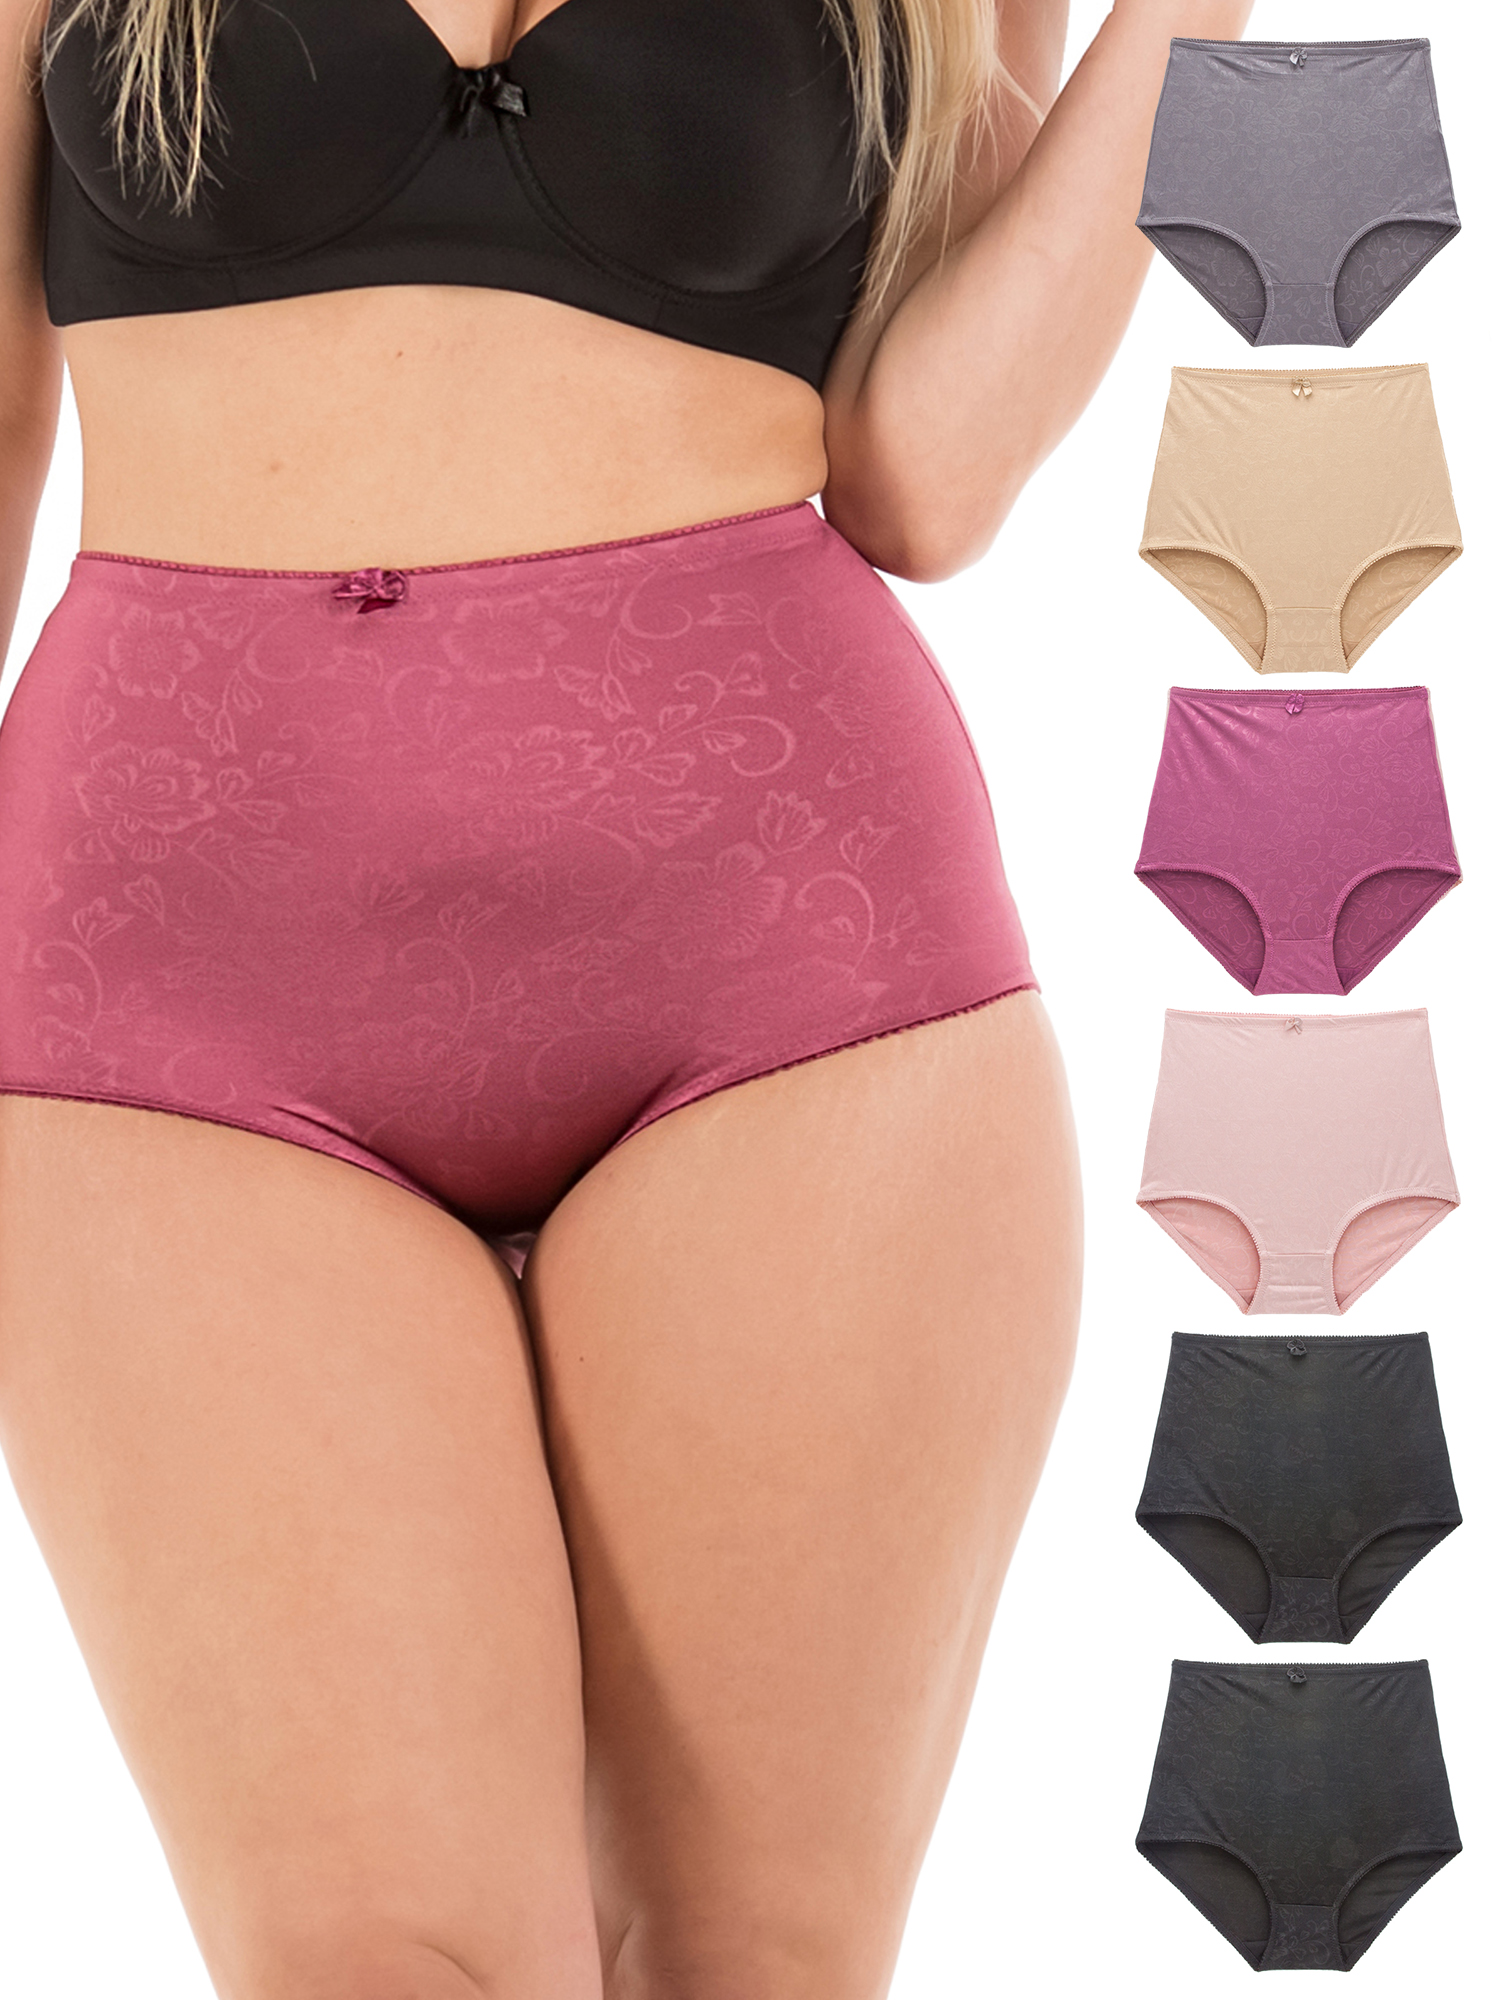 B2BODY Cotton Underwear Boyshort Panties for Women Small to Plus Size  Multi-Pack